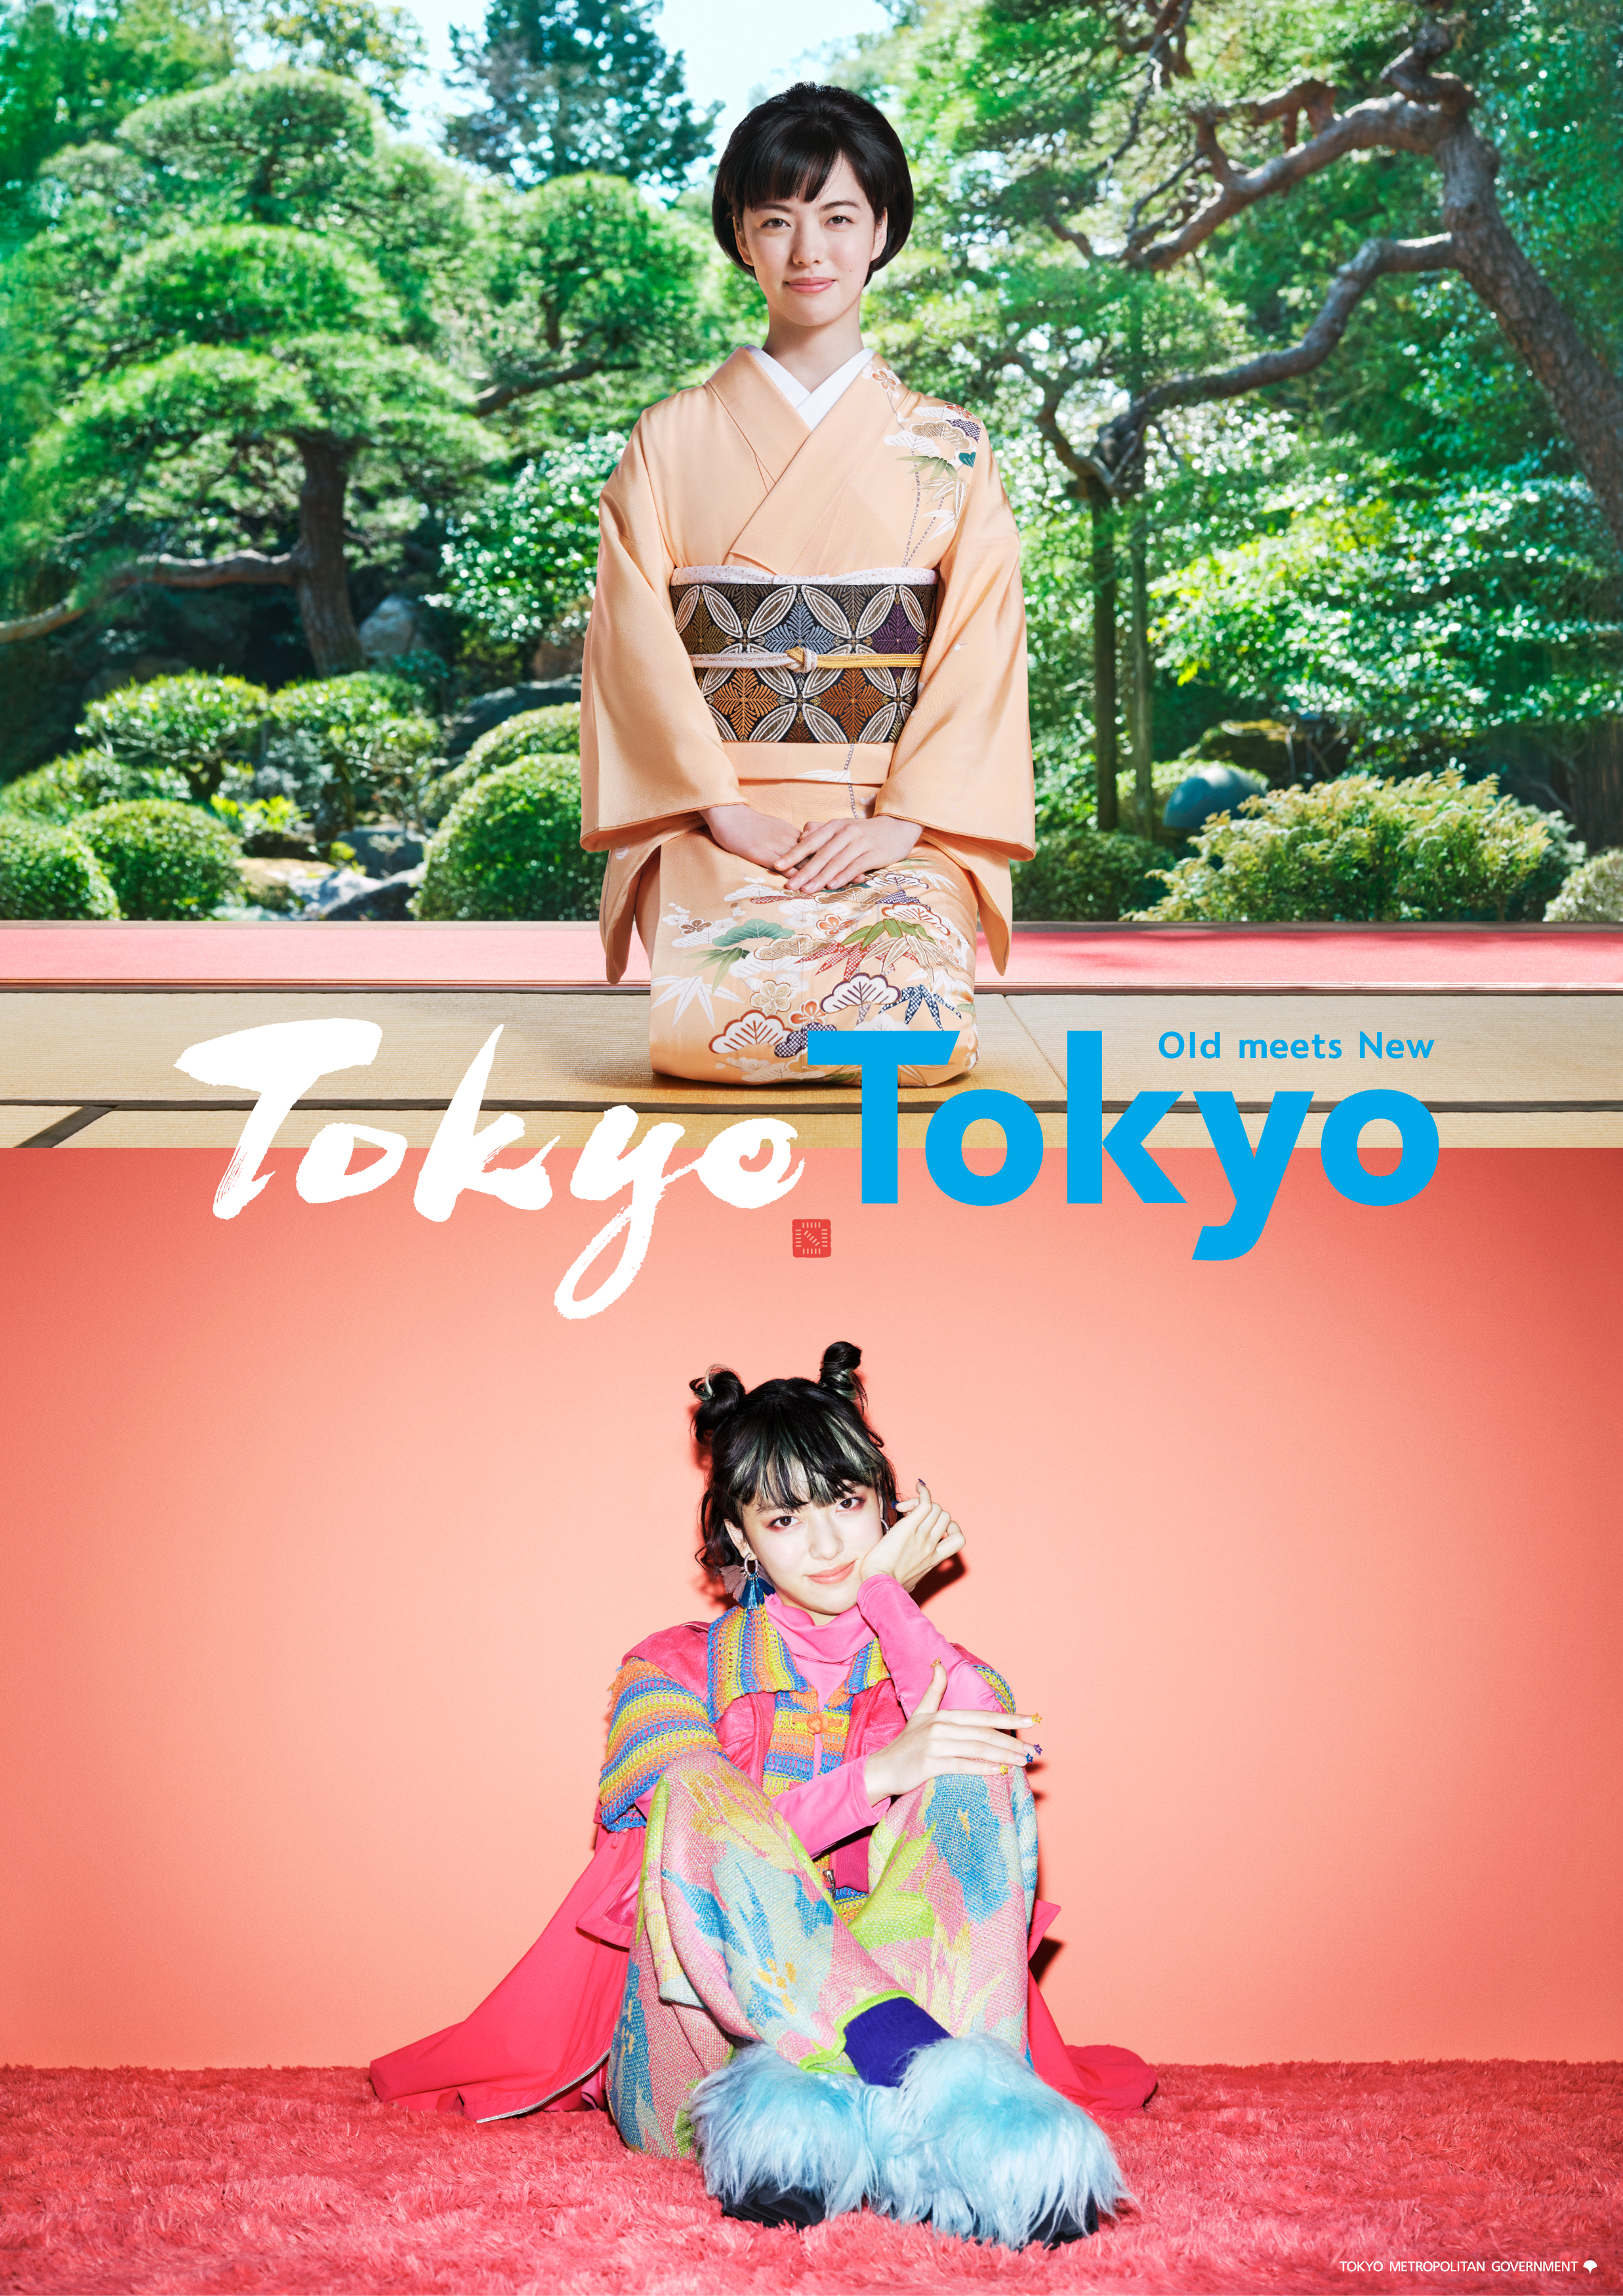 TokyoTokyo Old meets New Tokyo Scenery poster 3